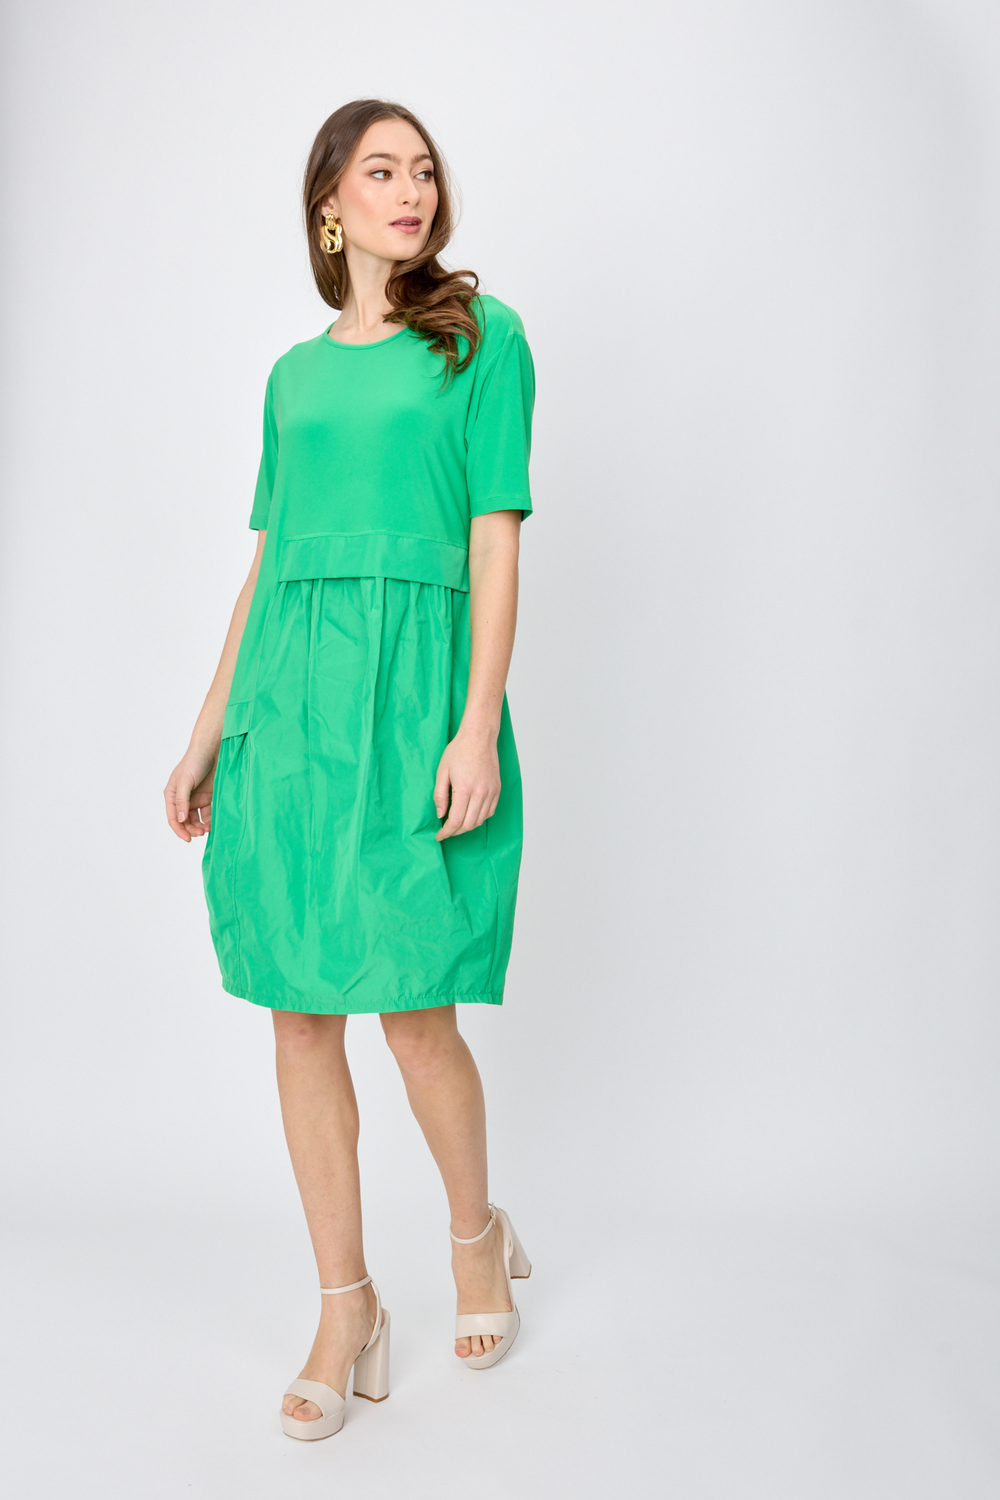 Two-Tone Voluminous Dress Style 241049. Island Green